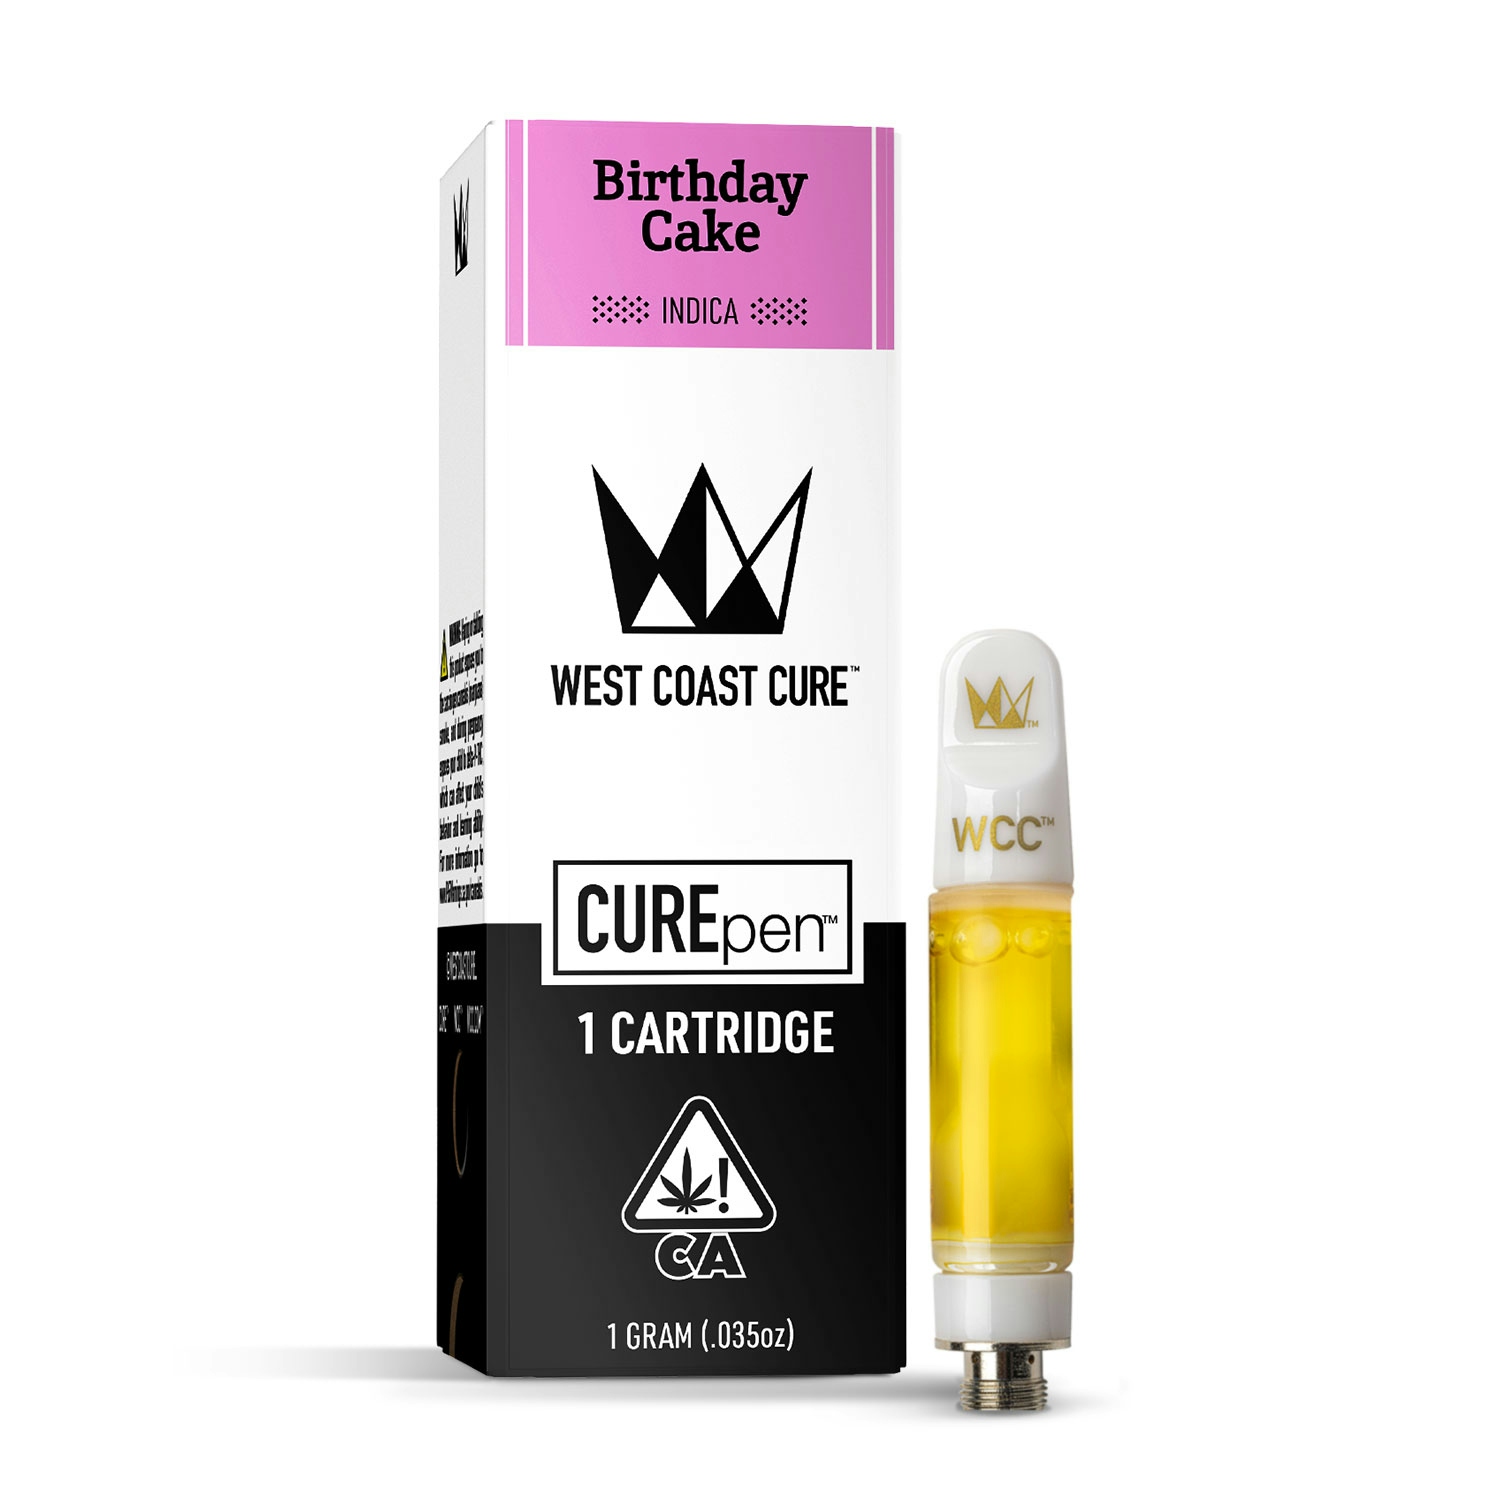 Birthday Cake CUREpen Cartridge - 1g